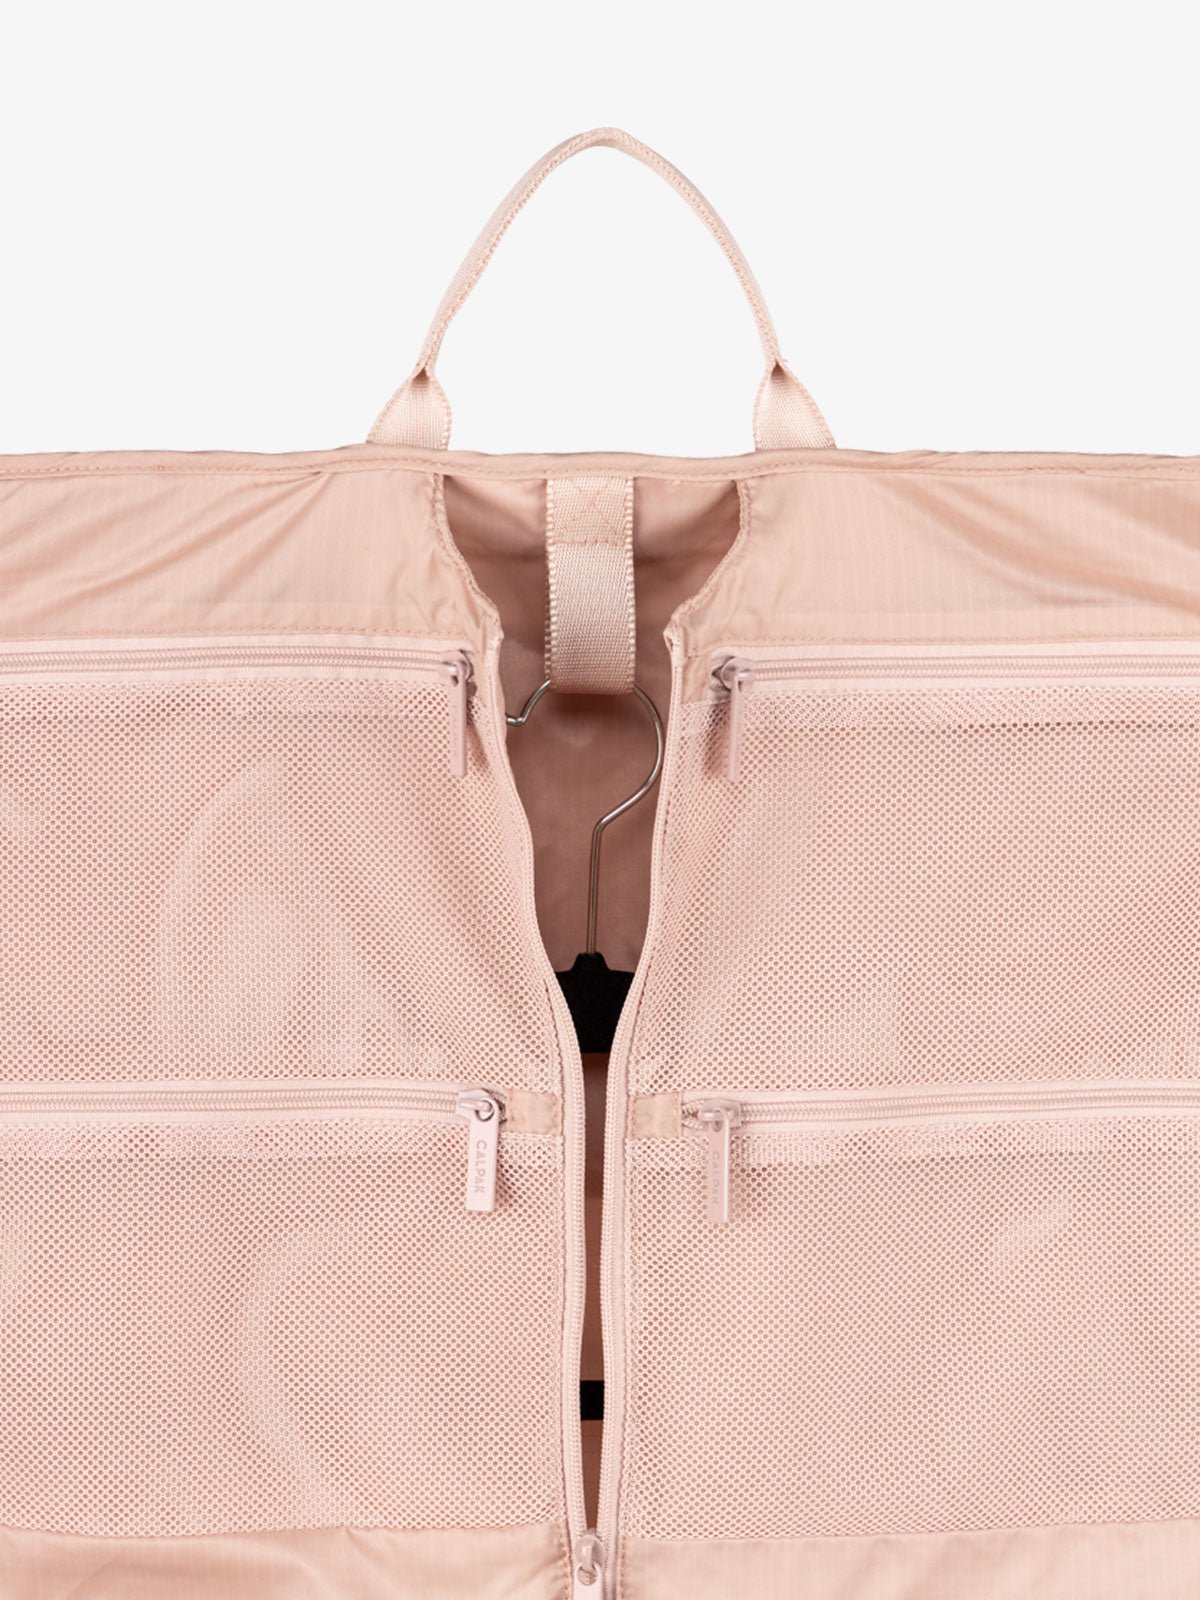 CALPAK small garment bag with handle and mesh pockets